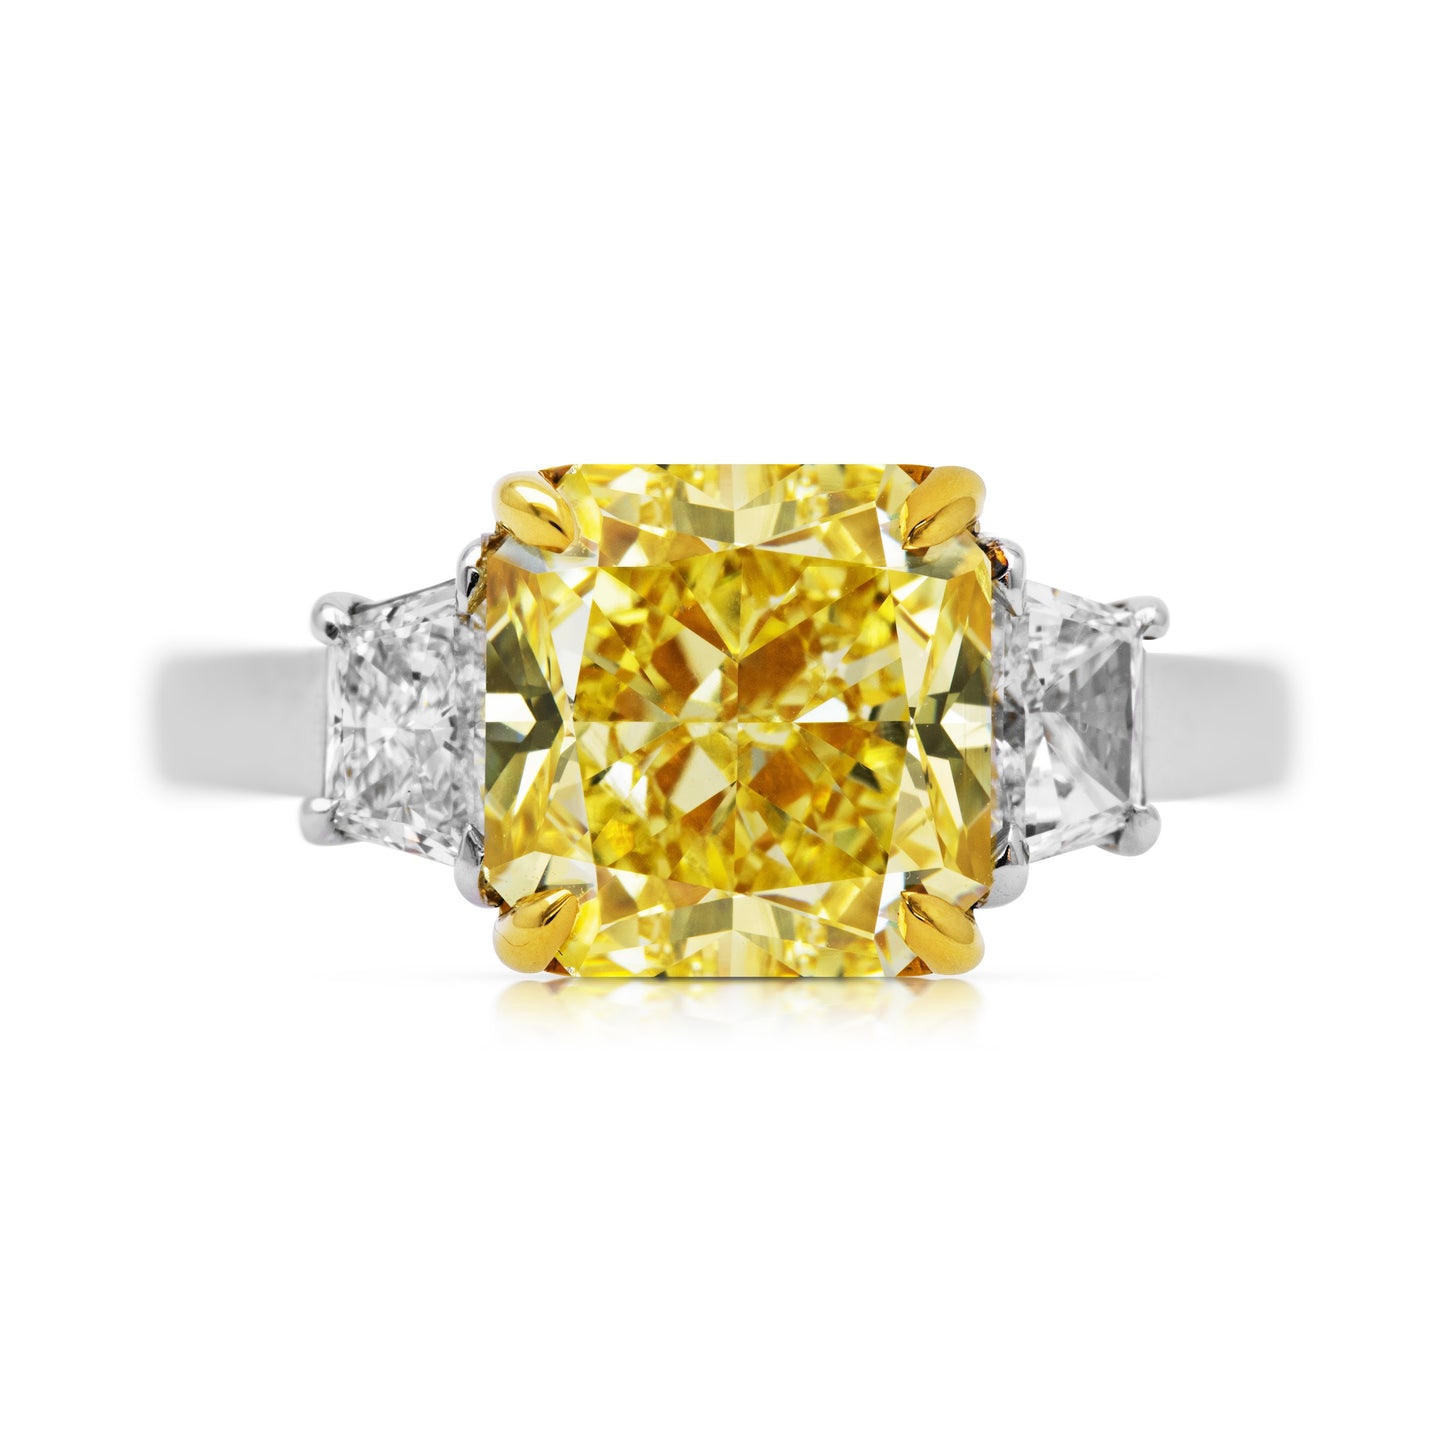 3.54ct Fancy Intense Yellow Diamond Ring